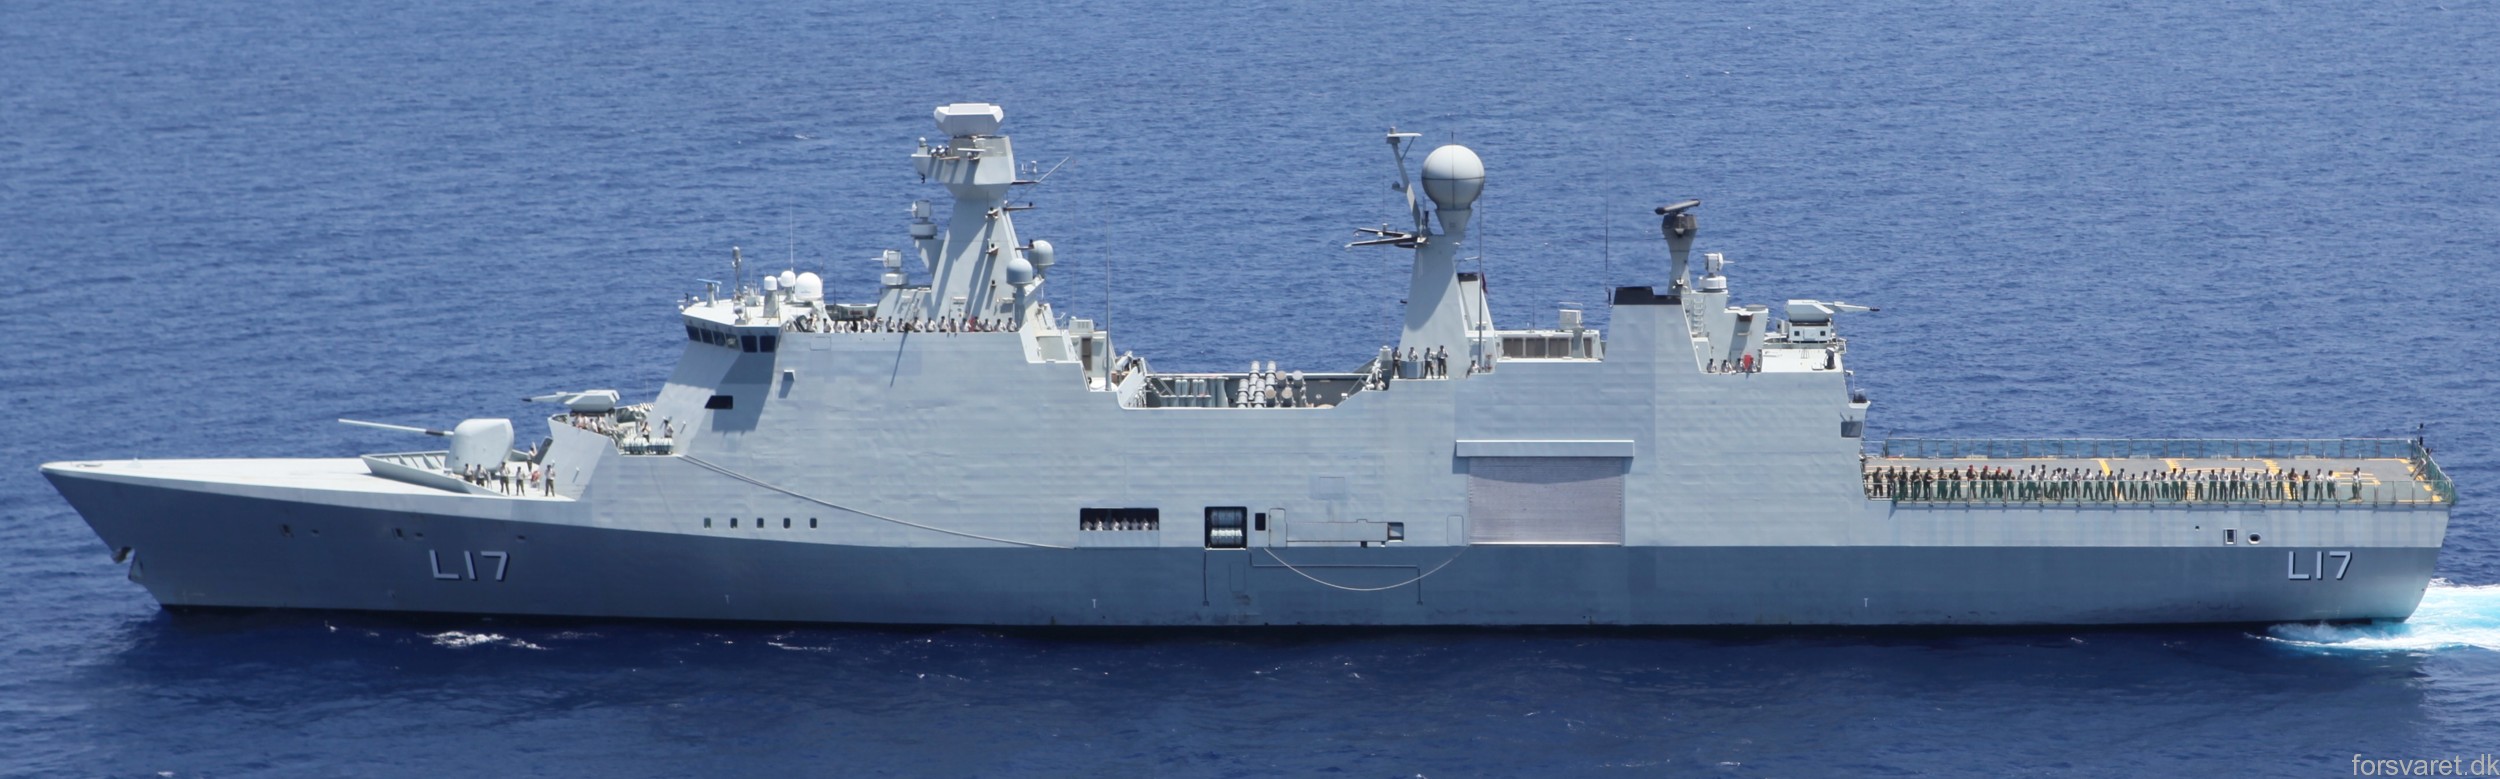 f-342 hdms esbern snare l-17 frigate command support ship royal danish navy 79